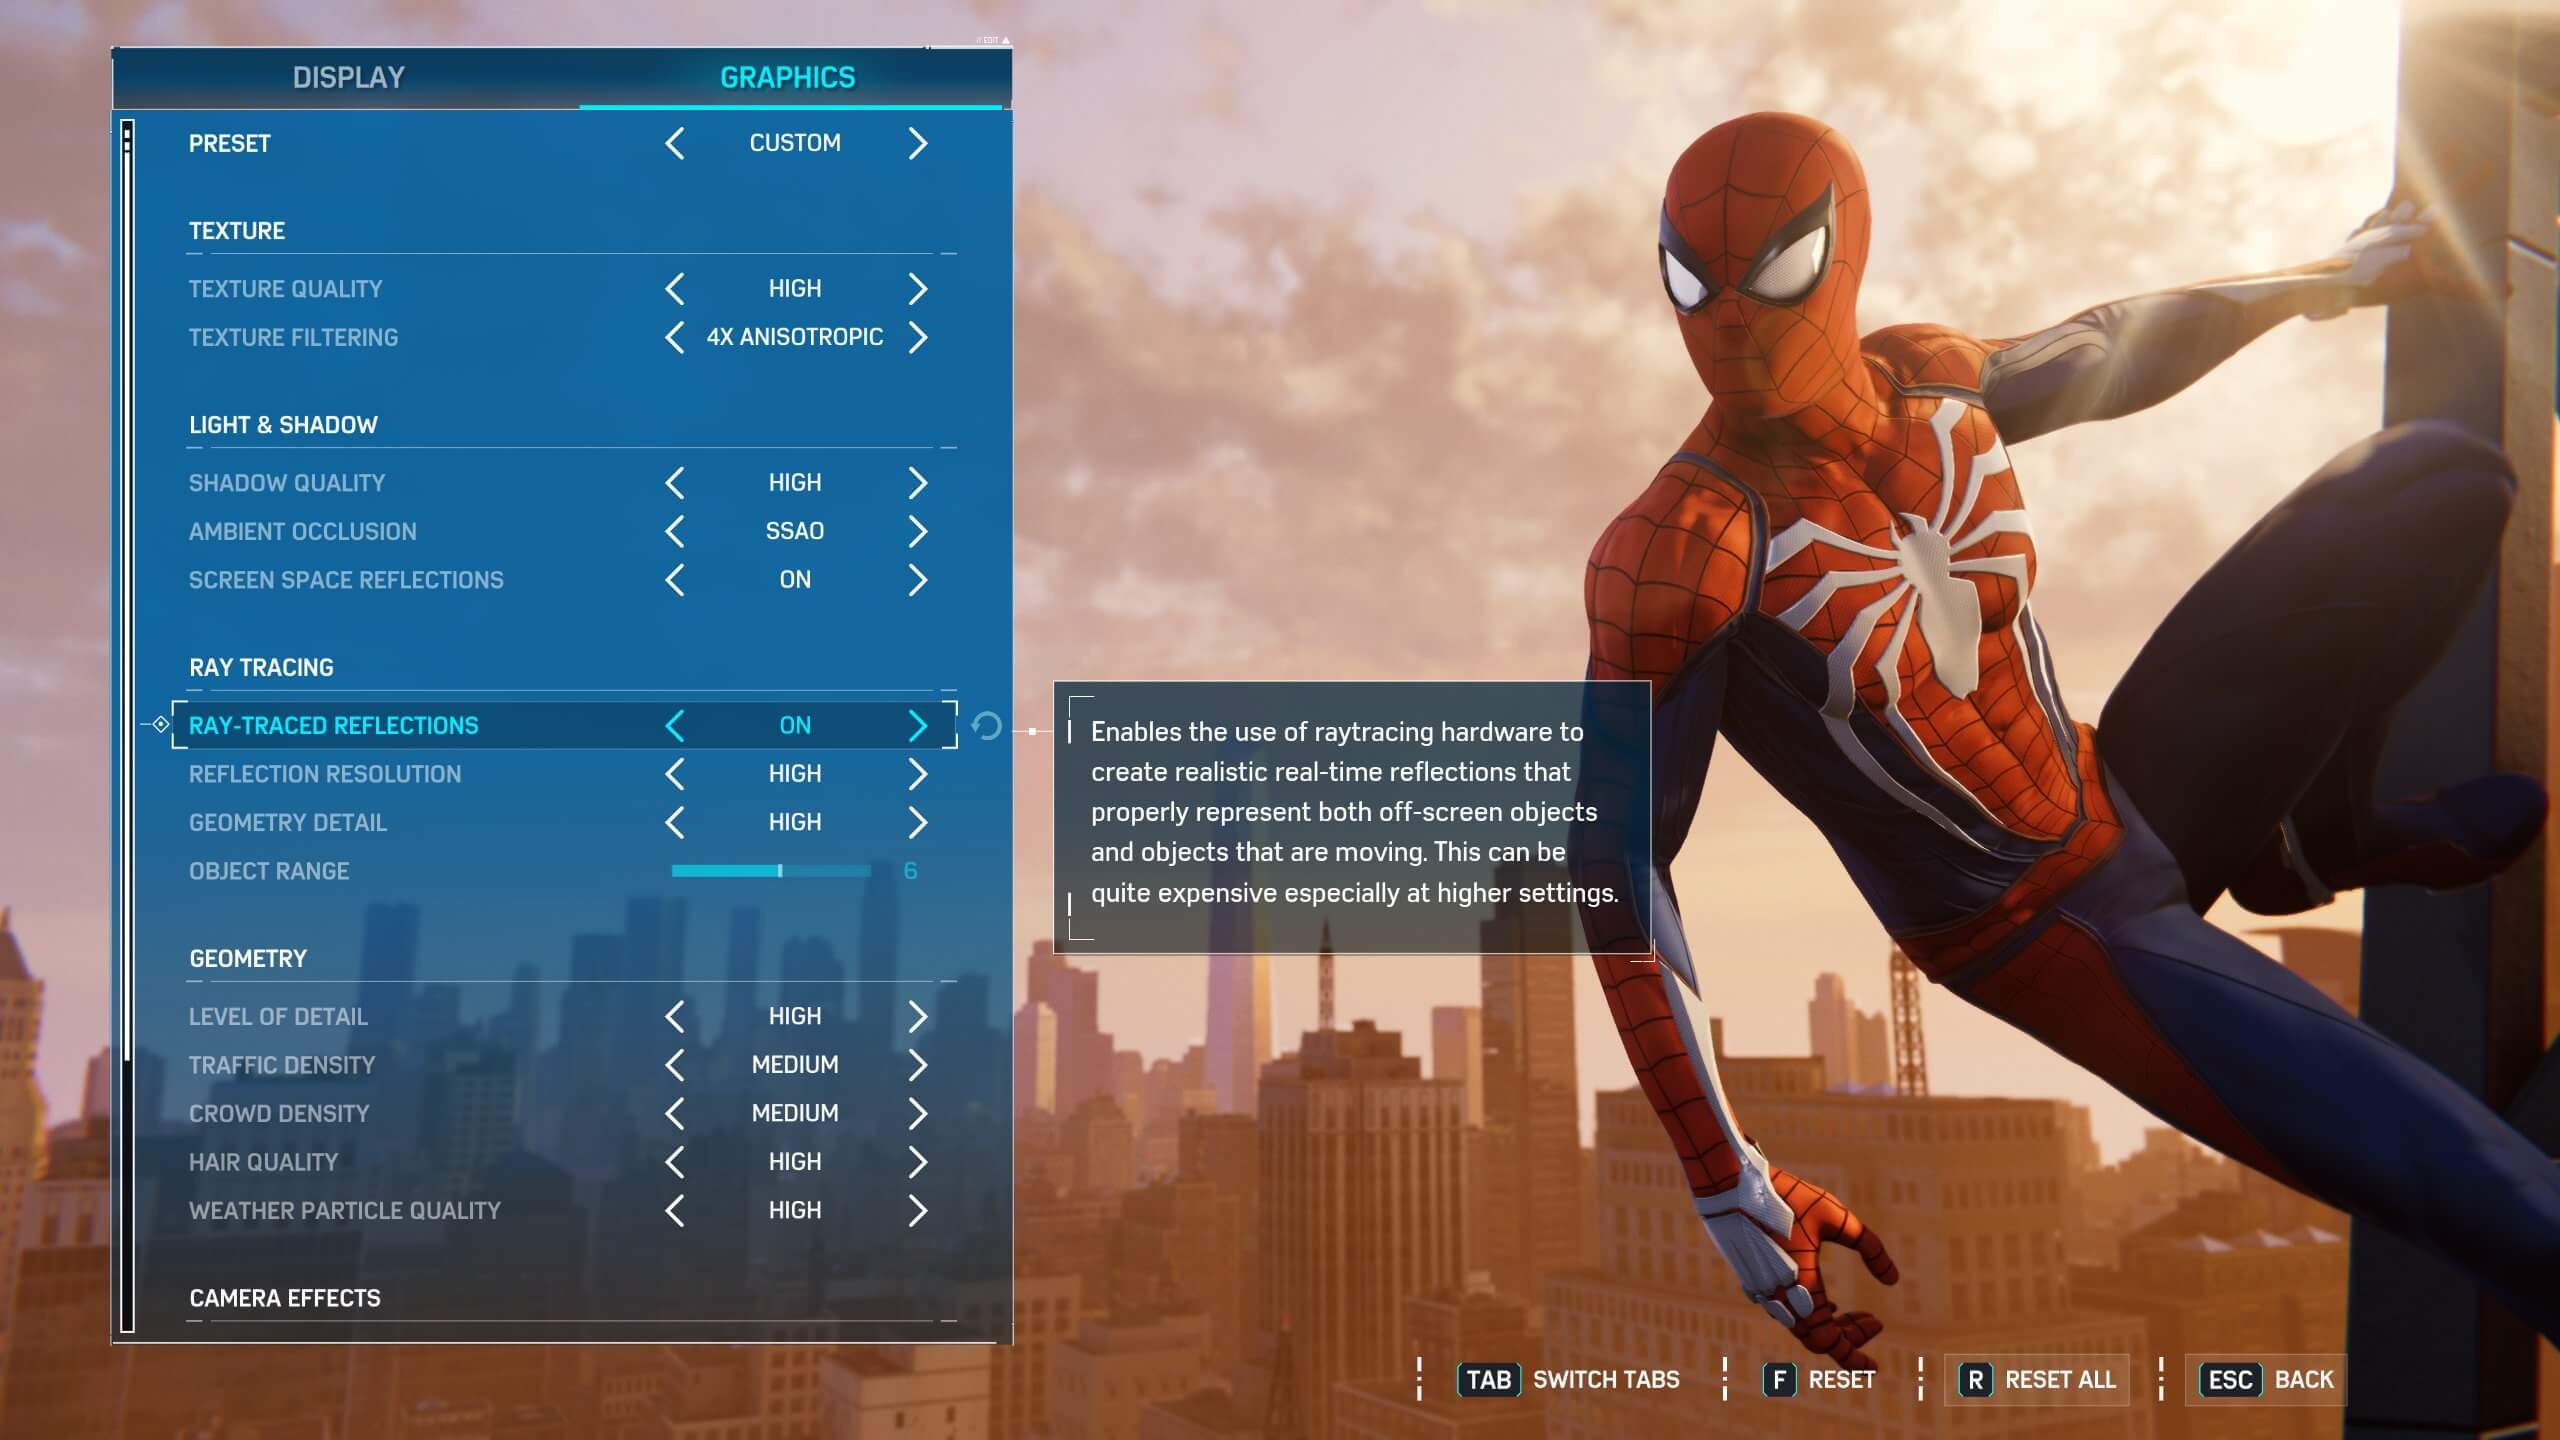 Marvel's Spider-Man - PS5 vs PC Max Settings Graphics Comparison - GameSpot